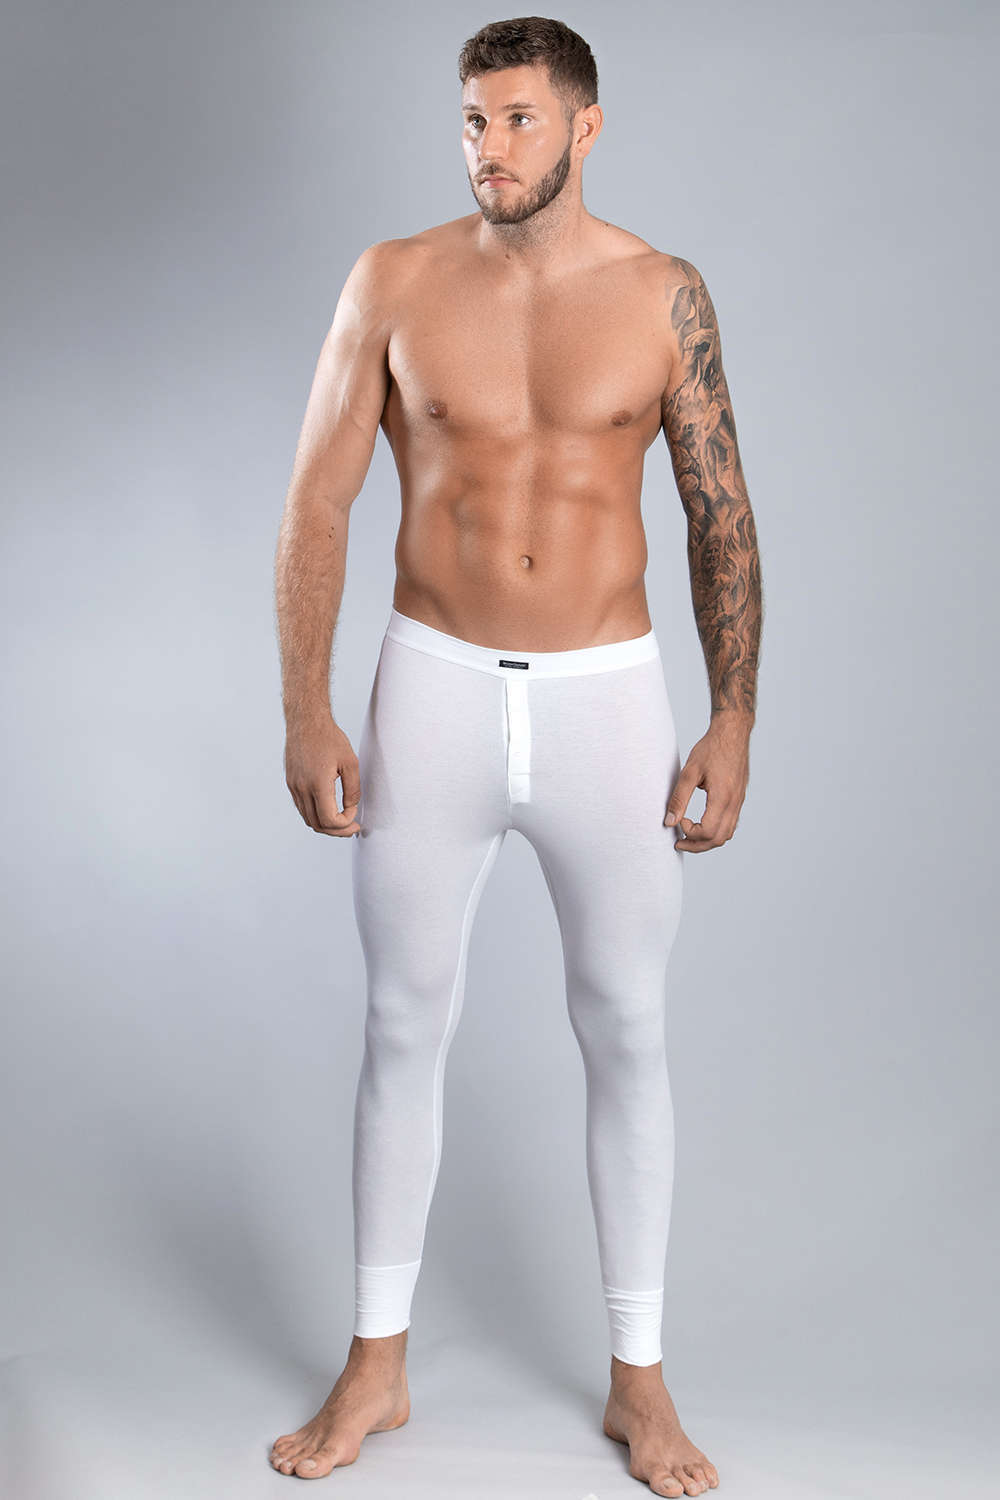 Bruno Banani Men's Retro Perfect Body All In One Underwear Suit Black White 